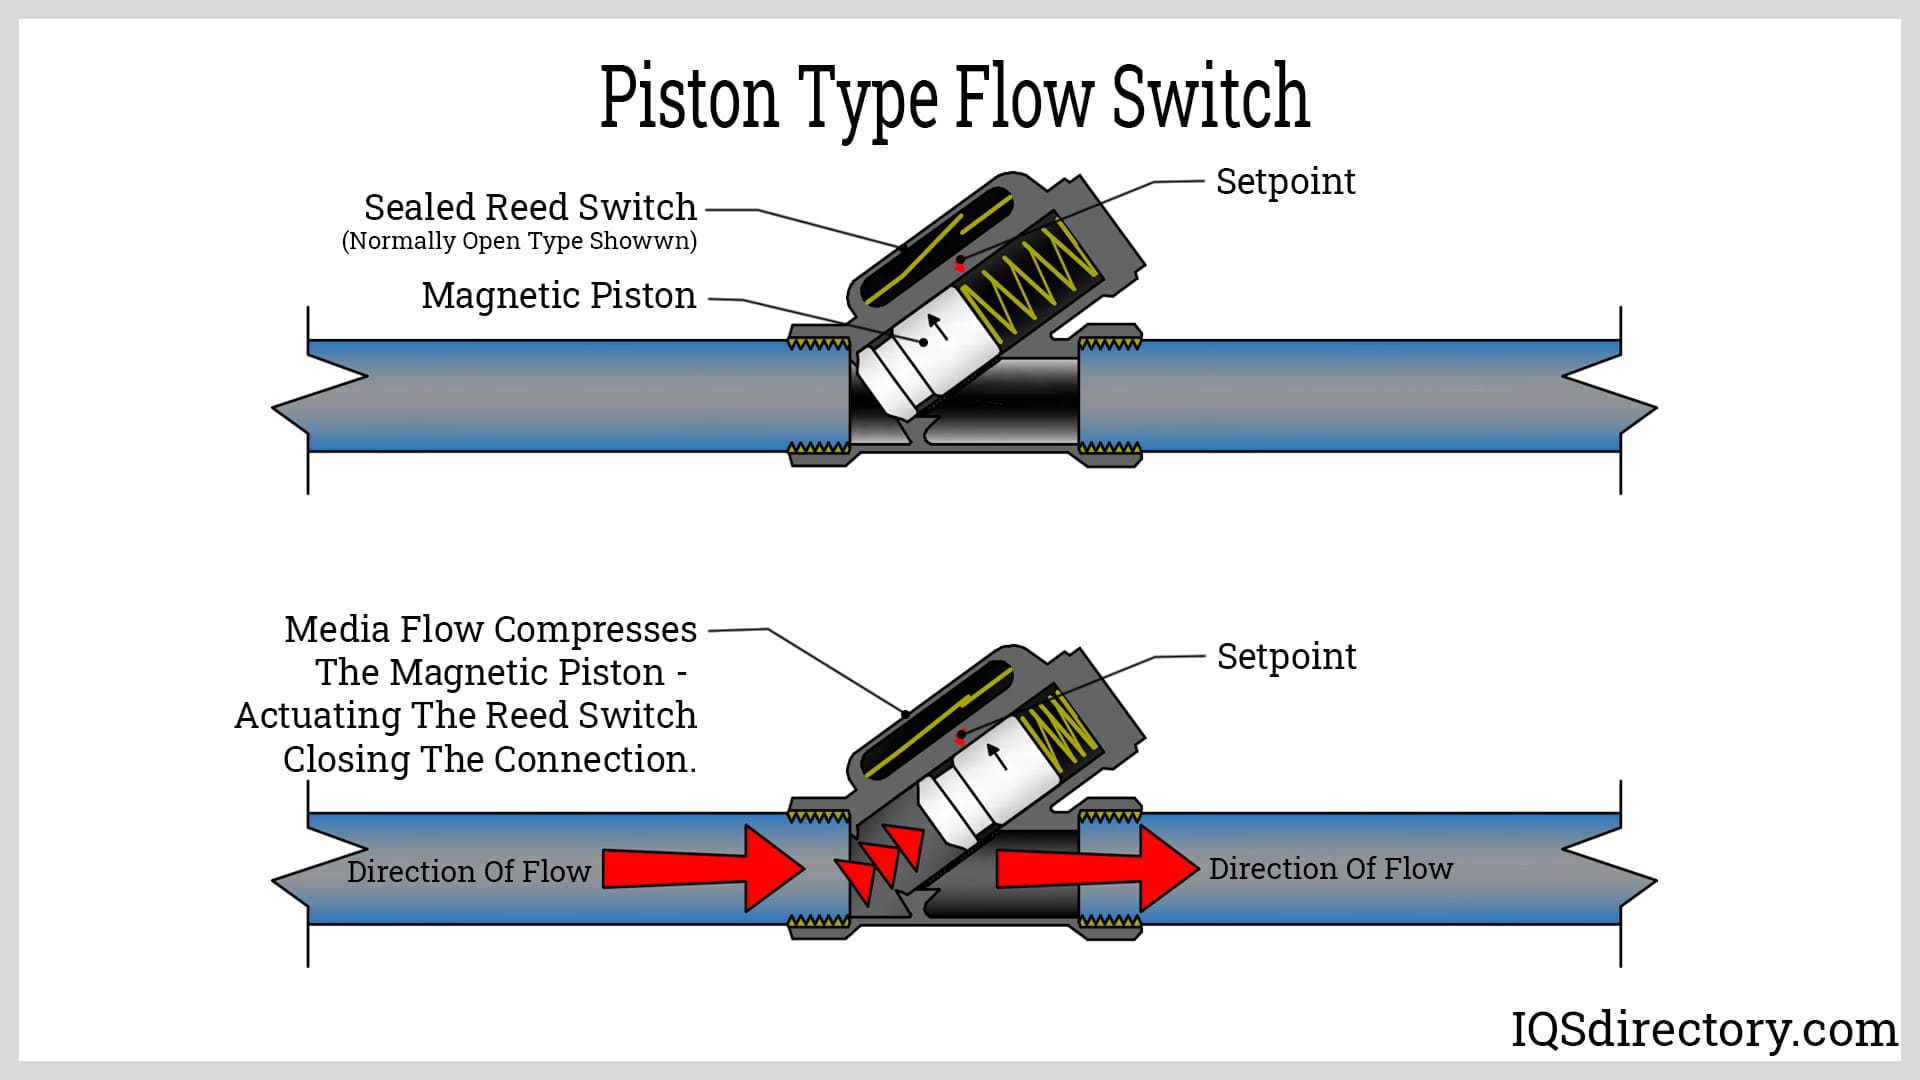 Piston Type Flow Switch